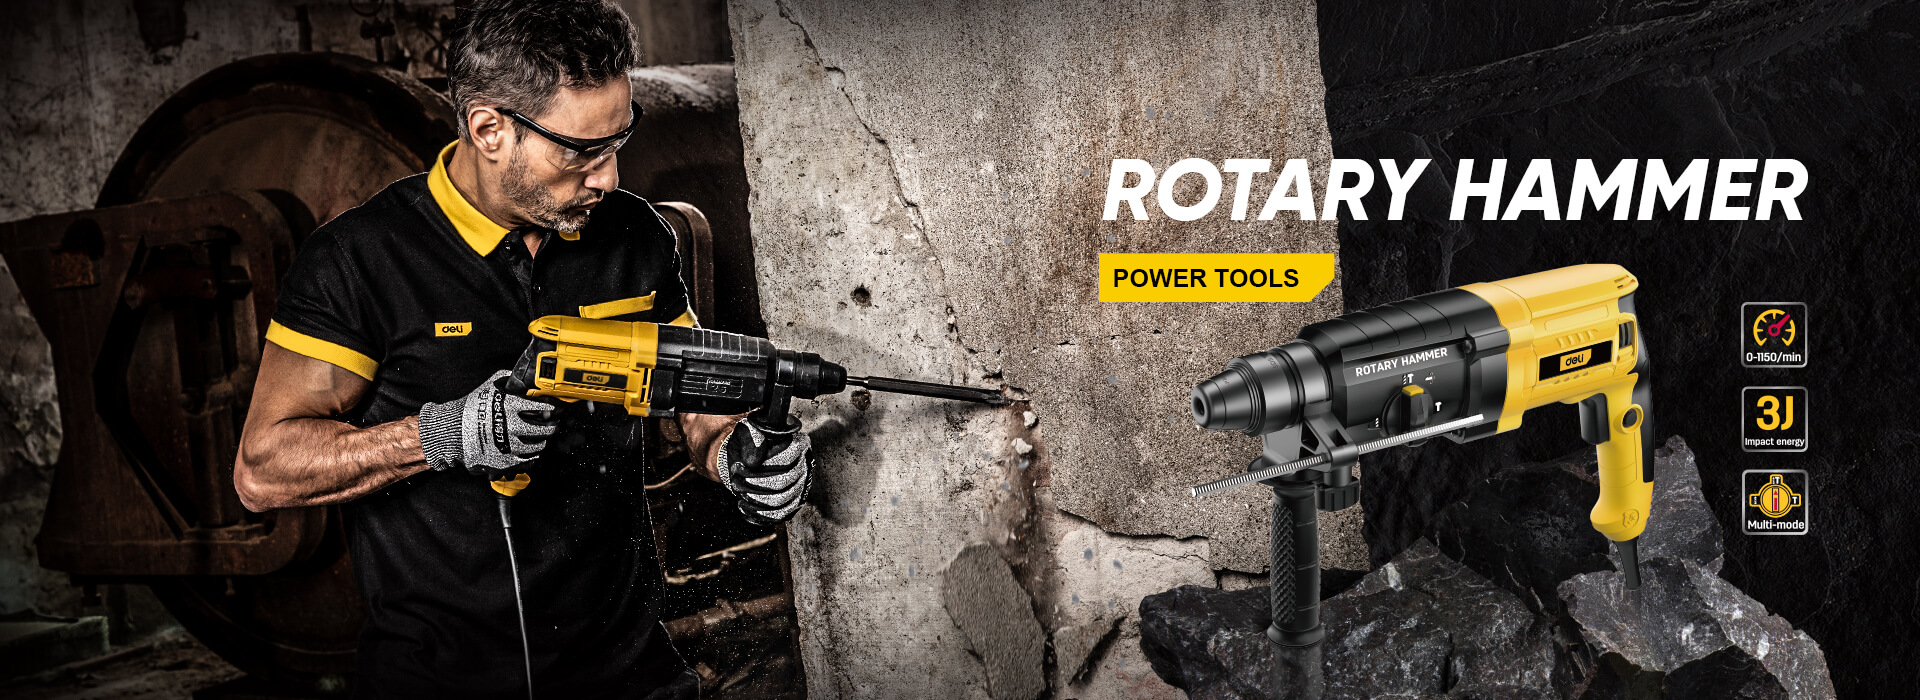 power tool manufacturer-Deli Tools